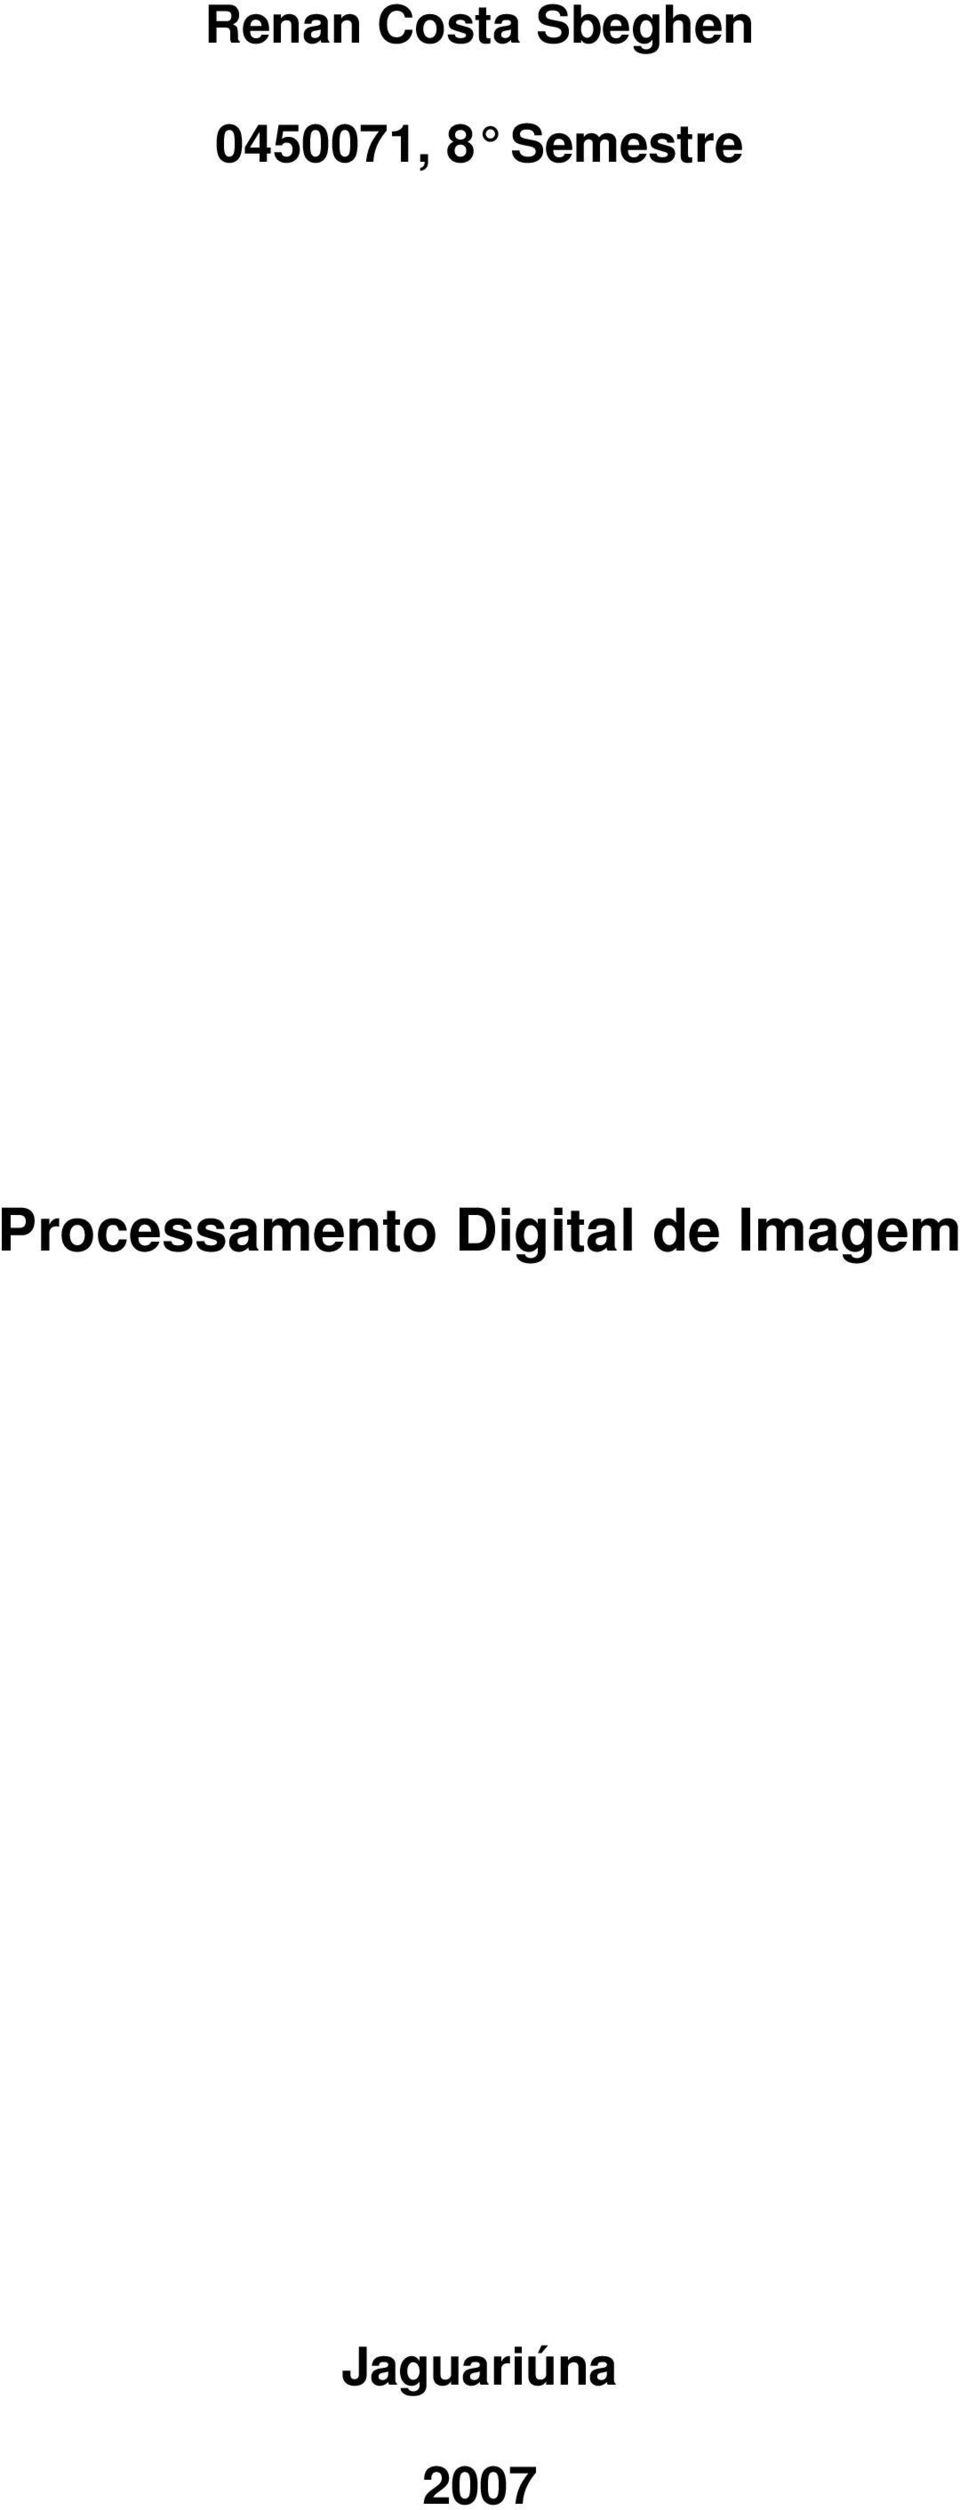 Processamento Digital